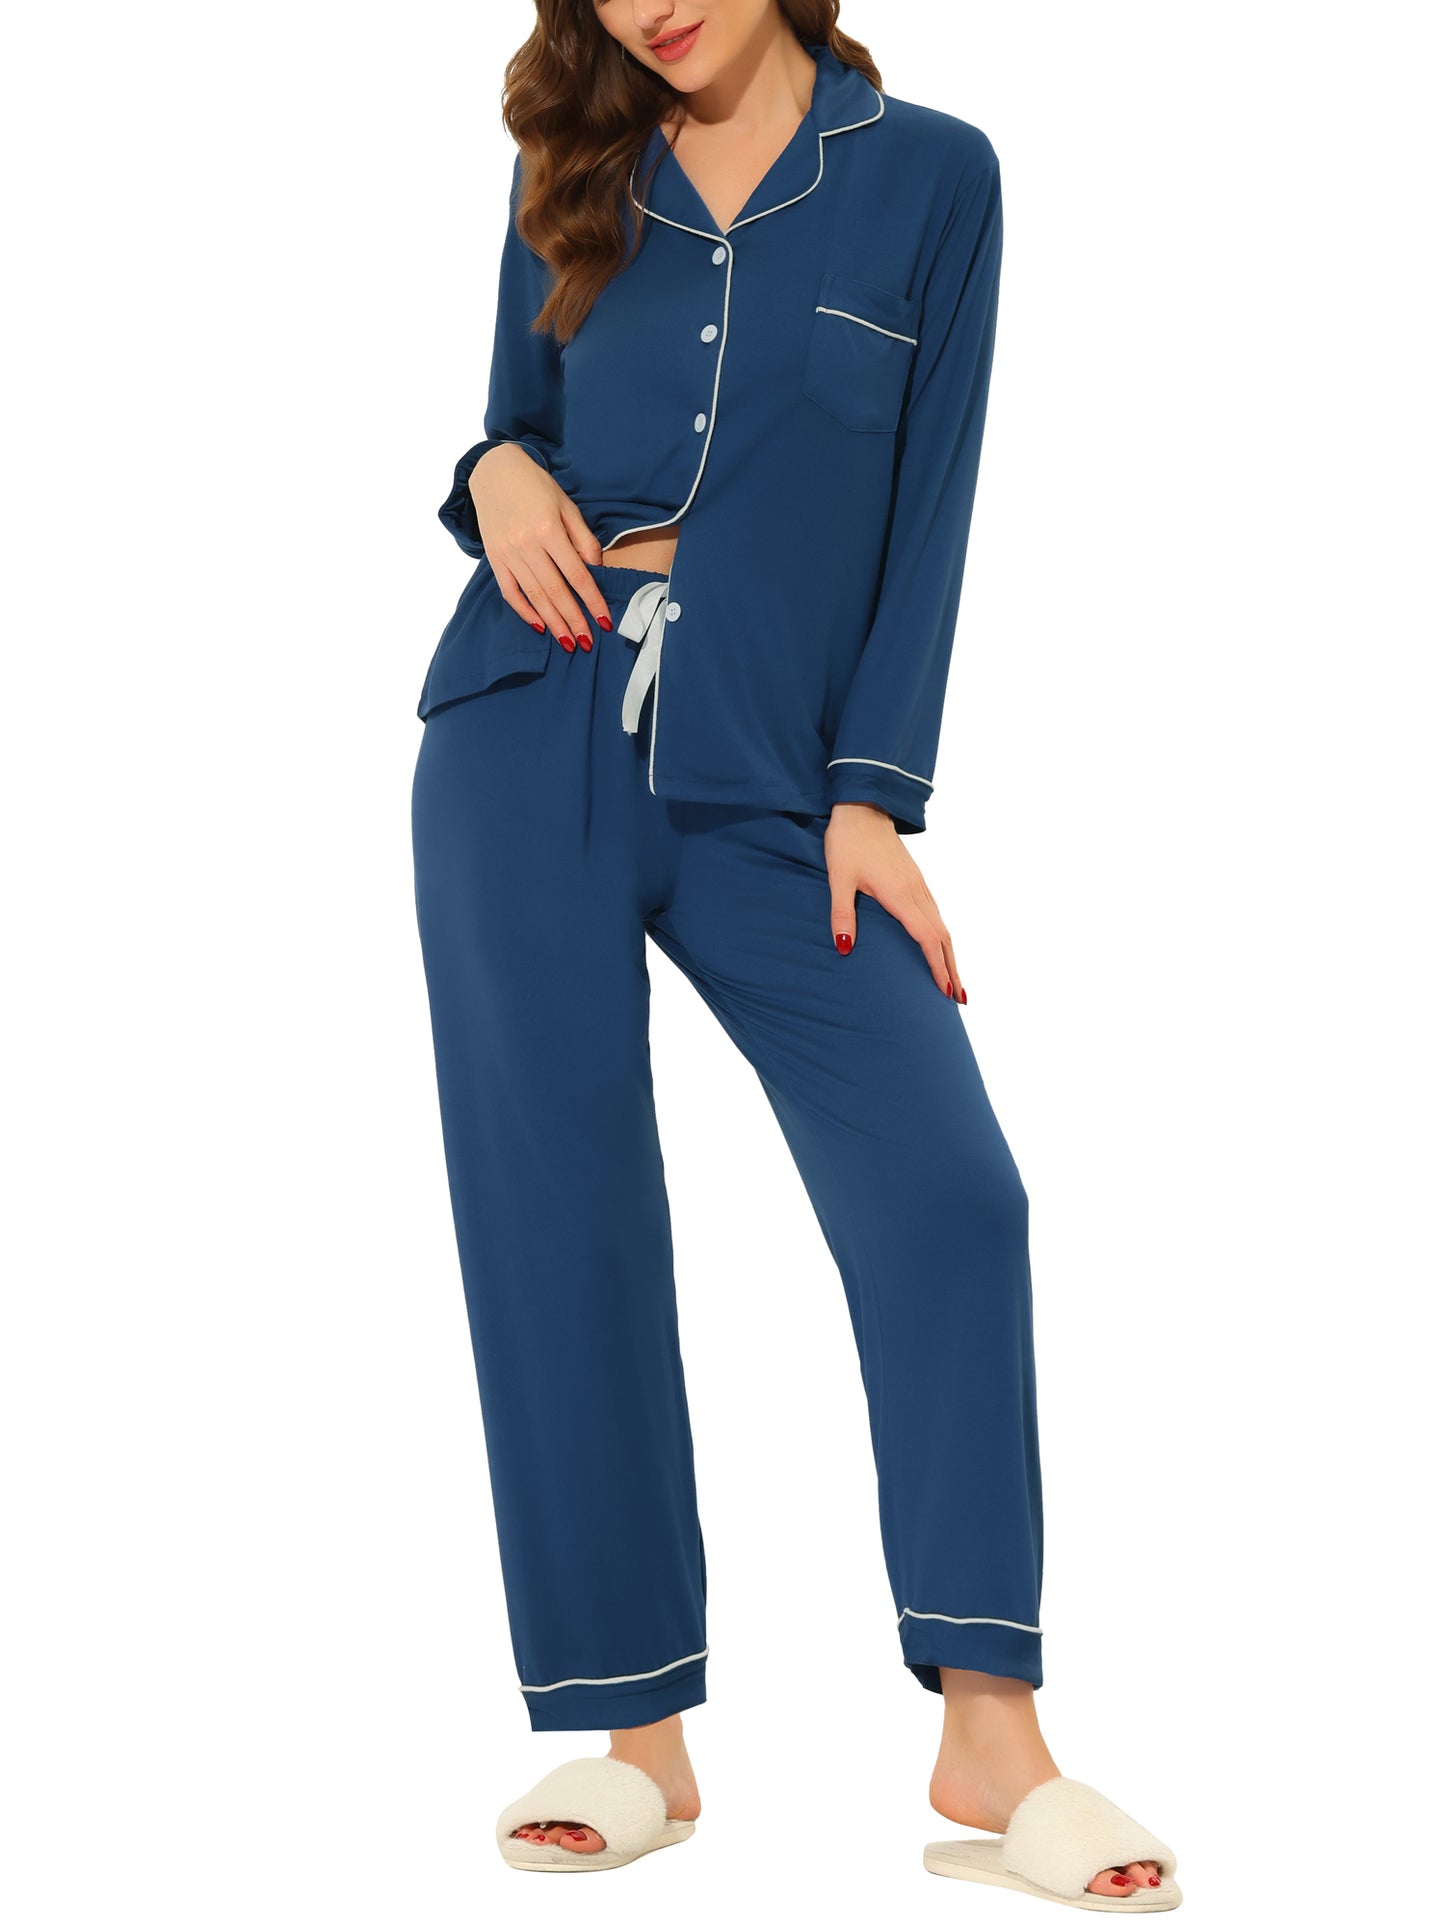 cheibear Pajama Sleep Shirt Nightwear Sleepwear Lounge Modal Pj Sets Blue